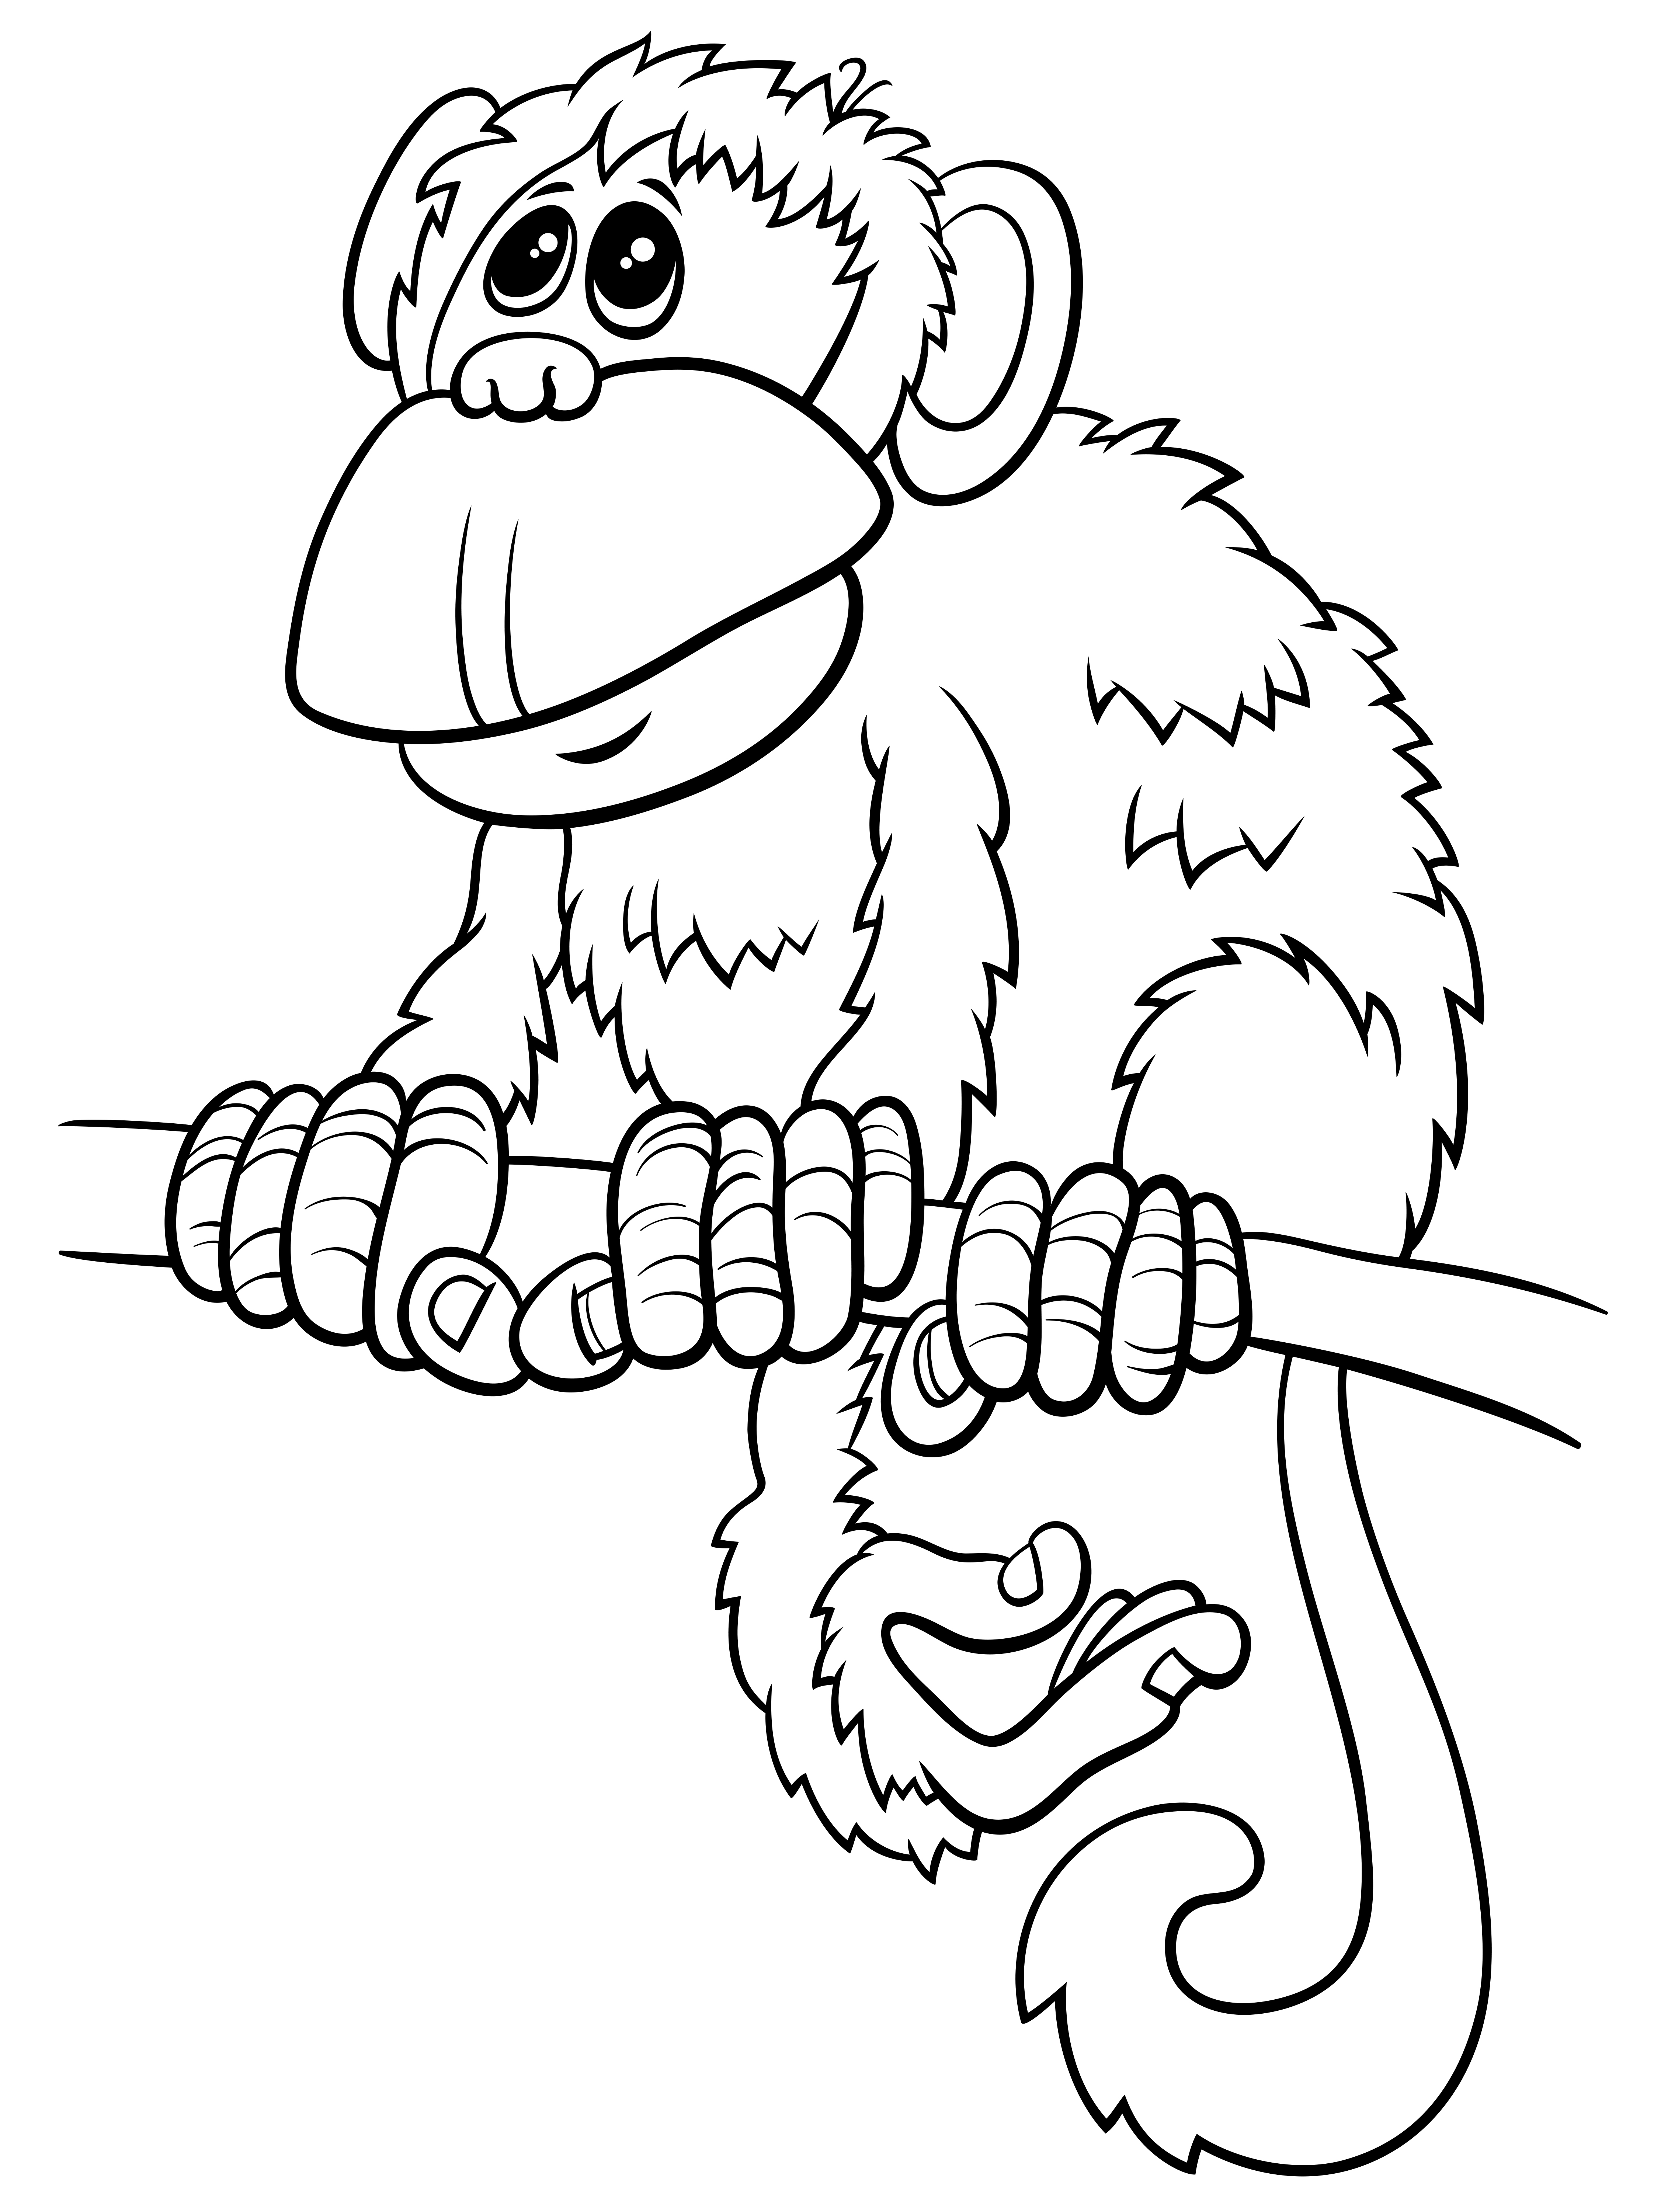 Macaco simples para colorir - Imprimir Desenhos